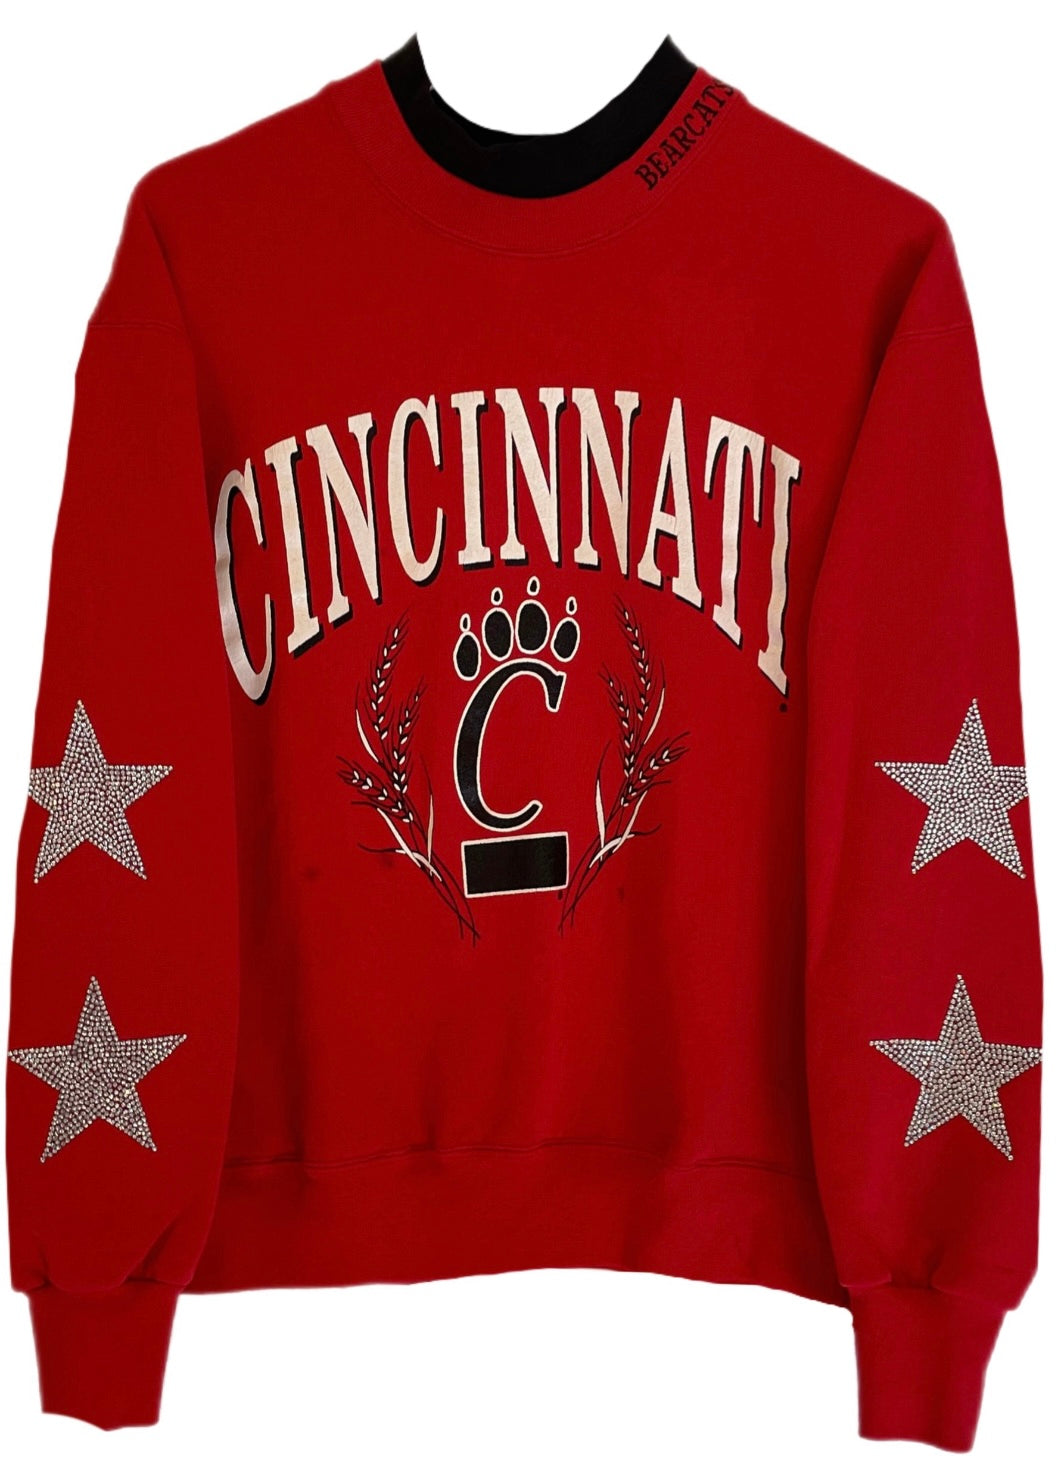 University of Cincinnati, Bearcats One of a KIND Vintage Sweatshirt with Crystal Star Design